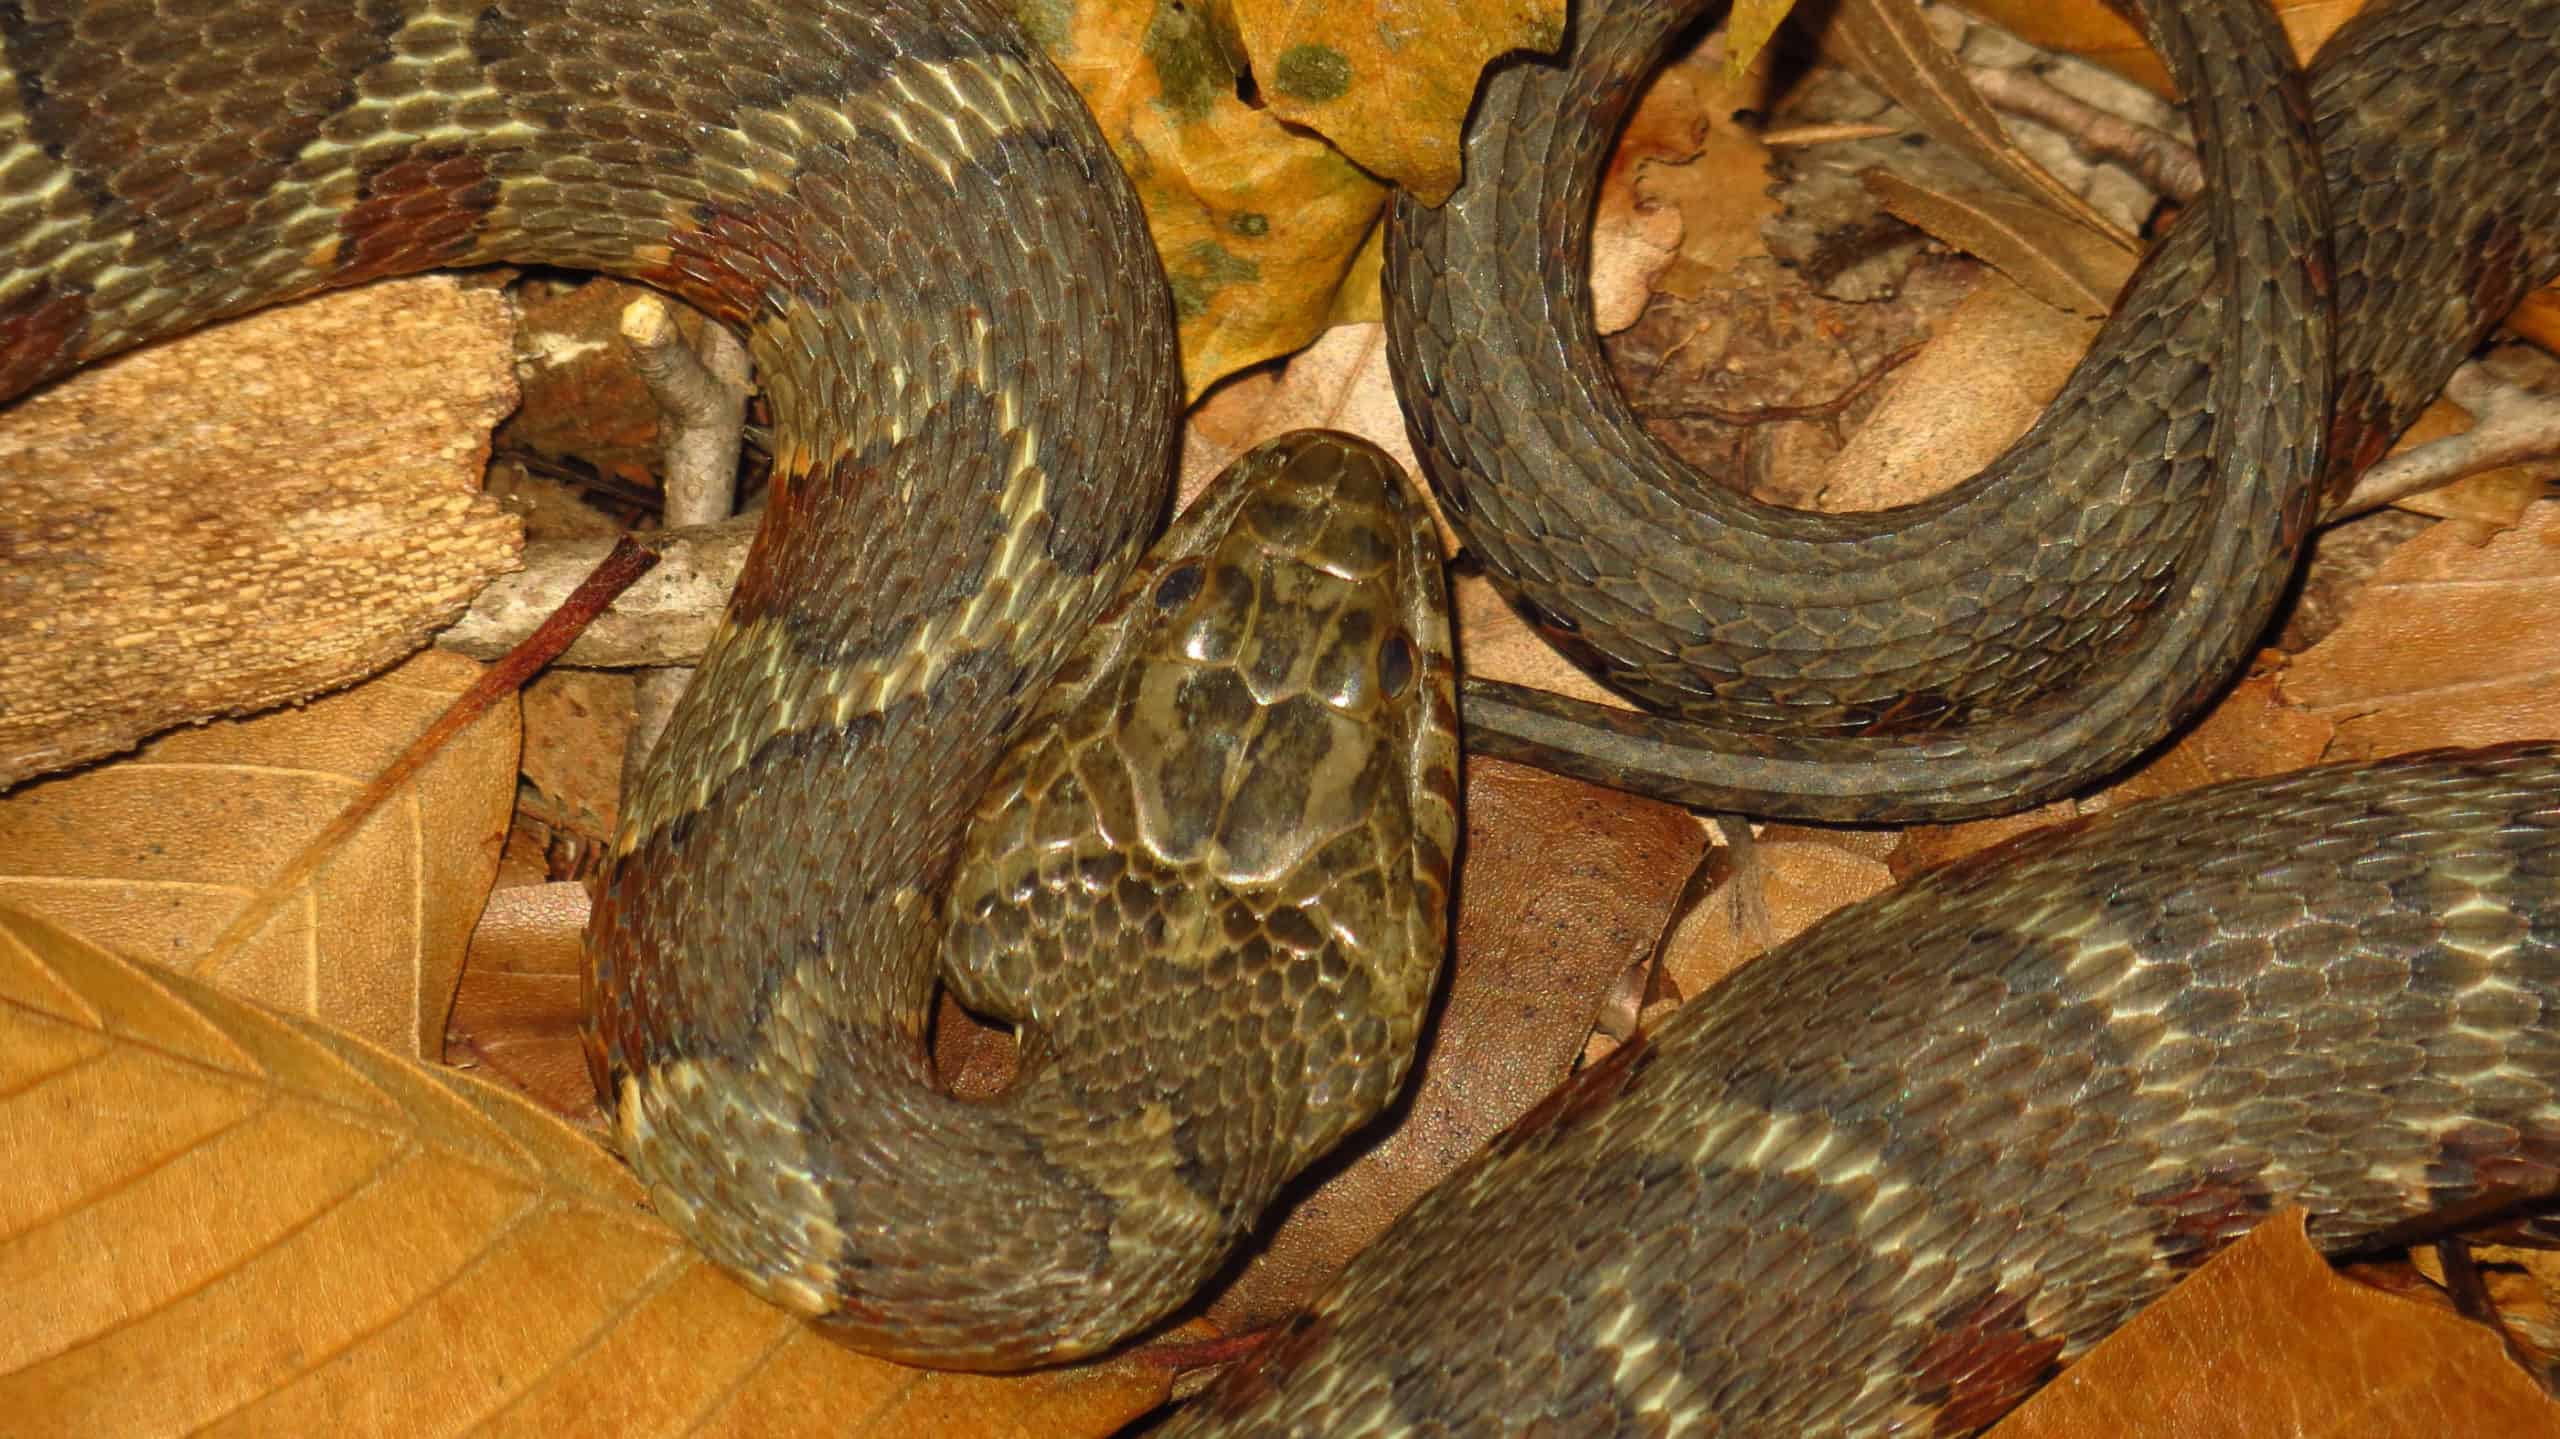 Common water snake closeup